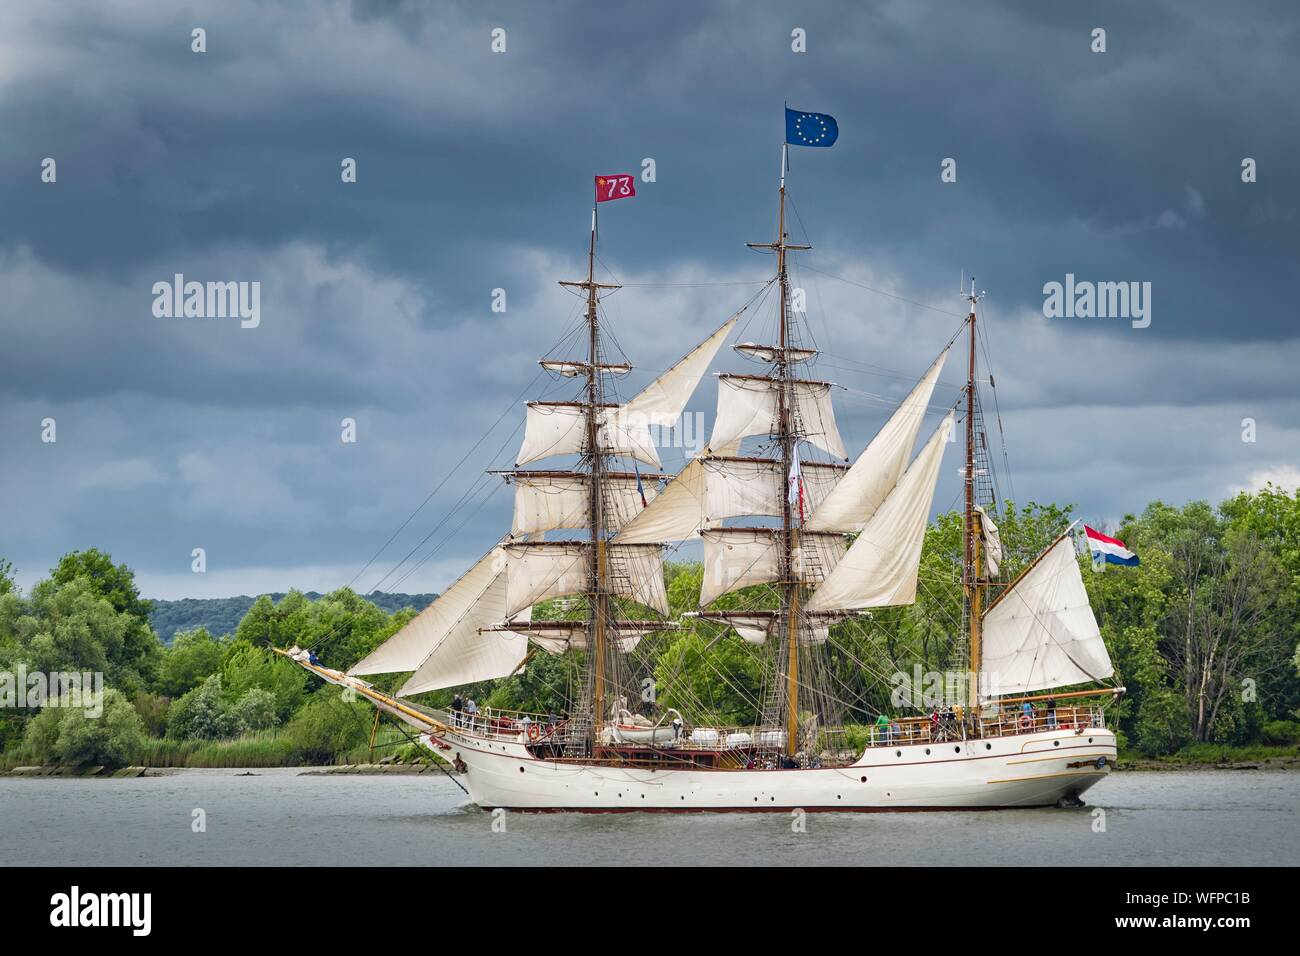 France, Seine Maritime, Rouen Armada, the Armada of Rouen 2019 on the Seine, the Europa, three-masted Dutch barque school ship Stock Photo